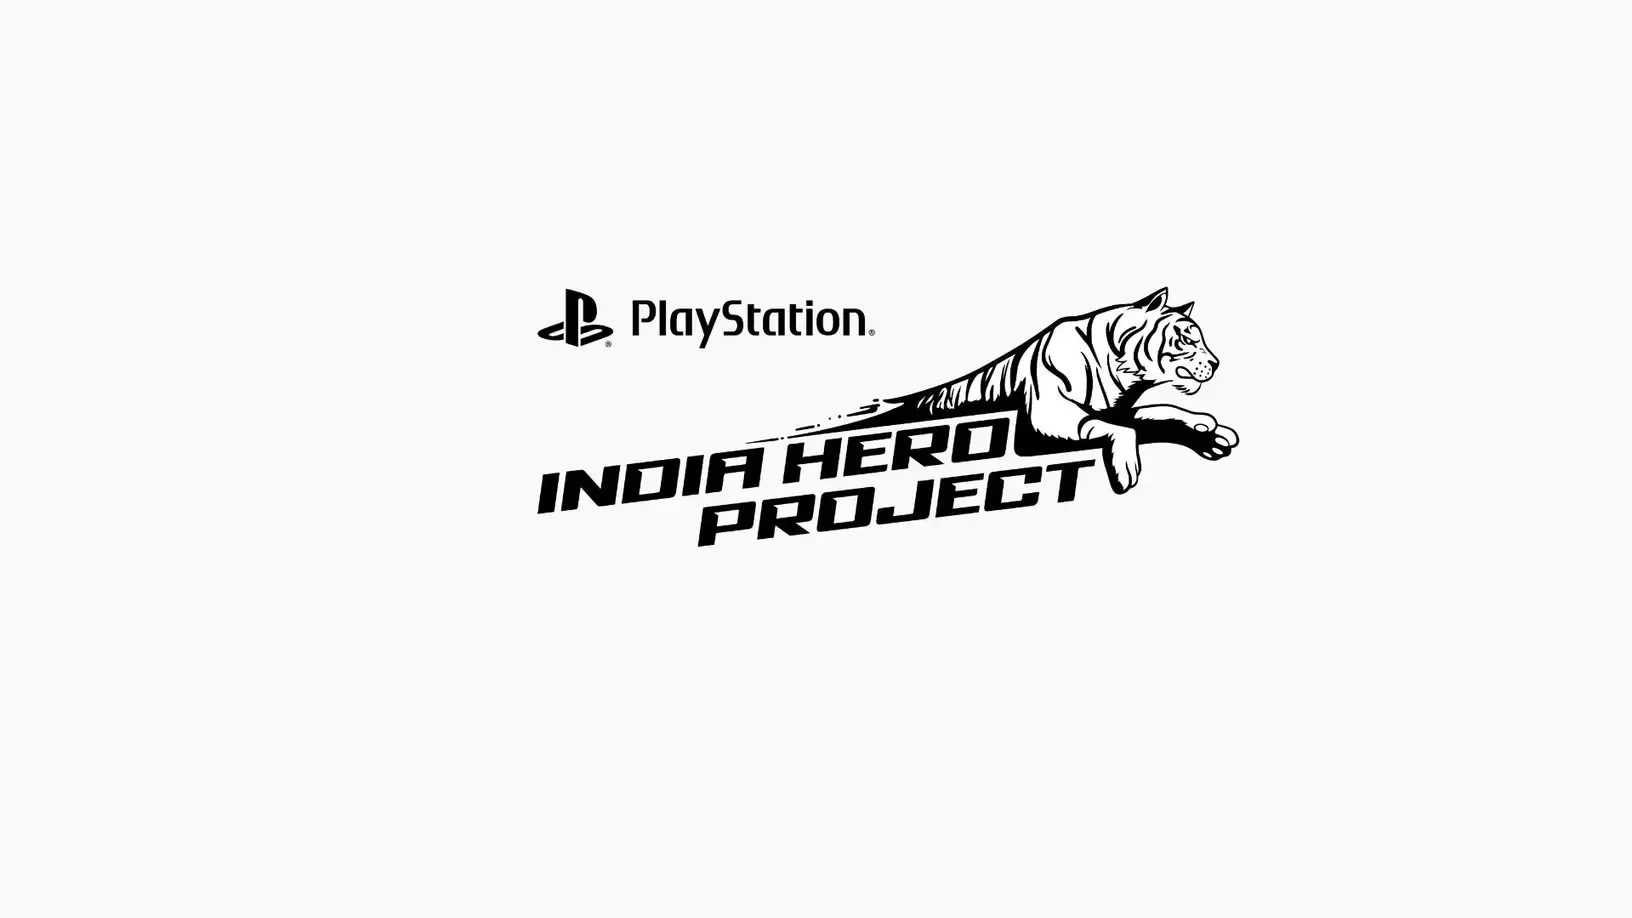 Spiele im Rahmen des PlayStation India Hero Project angekündigt Heropic